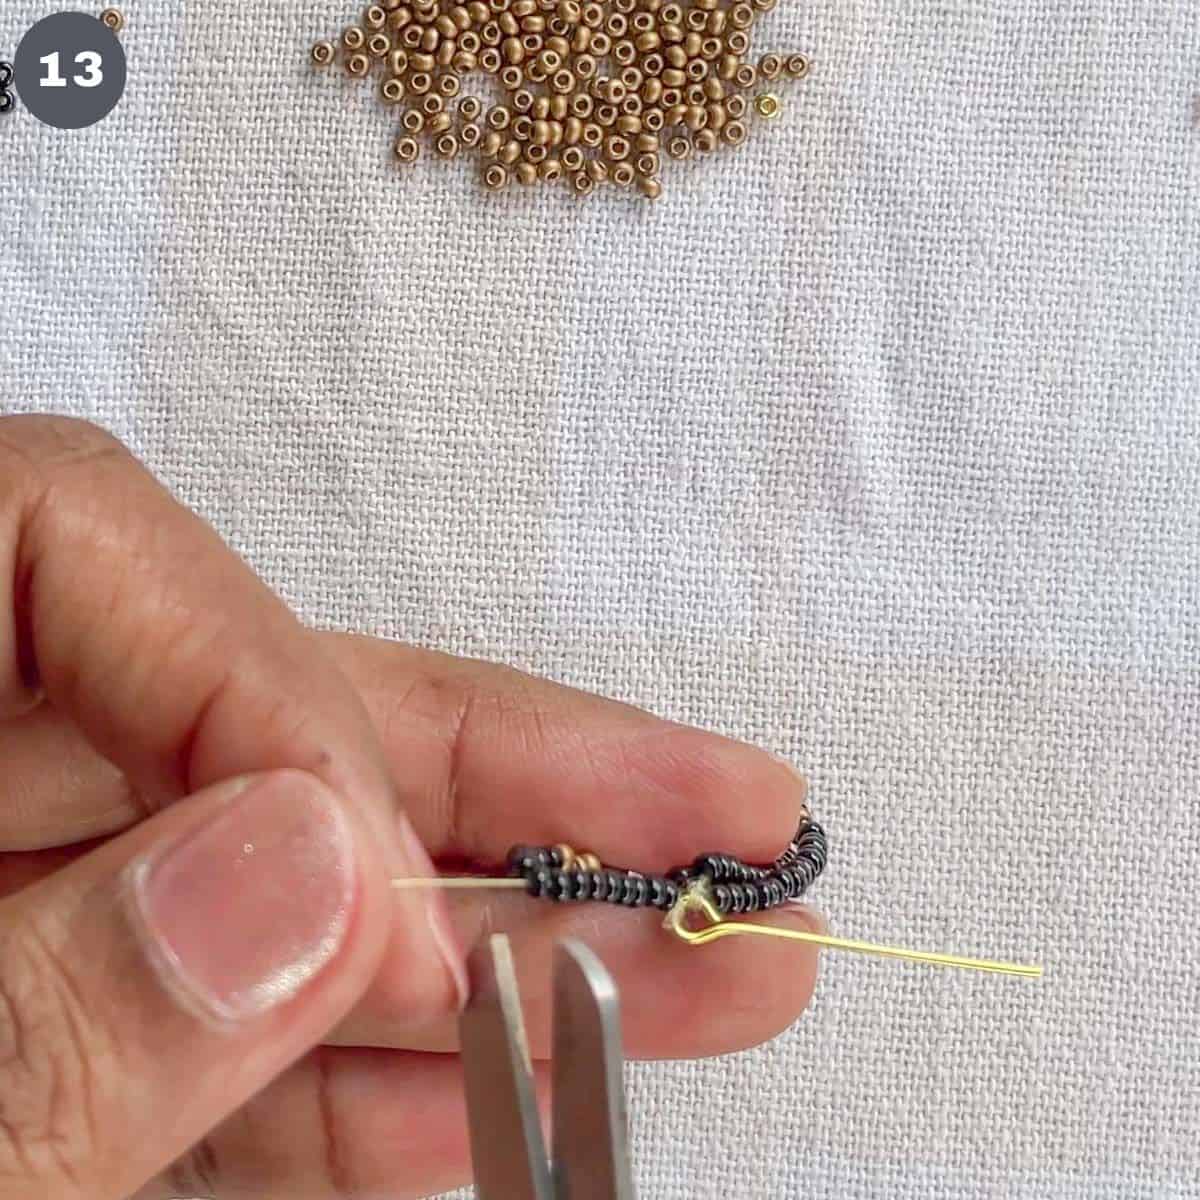 Cutting thread with scissors.